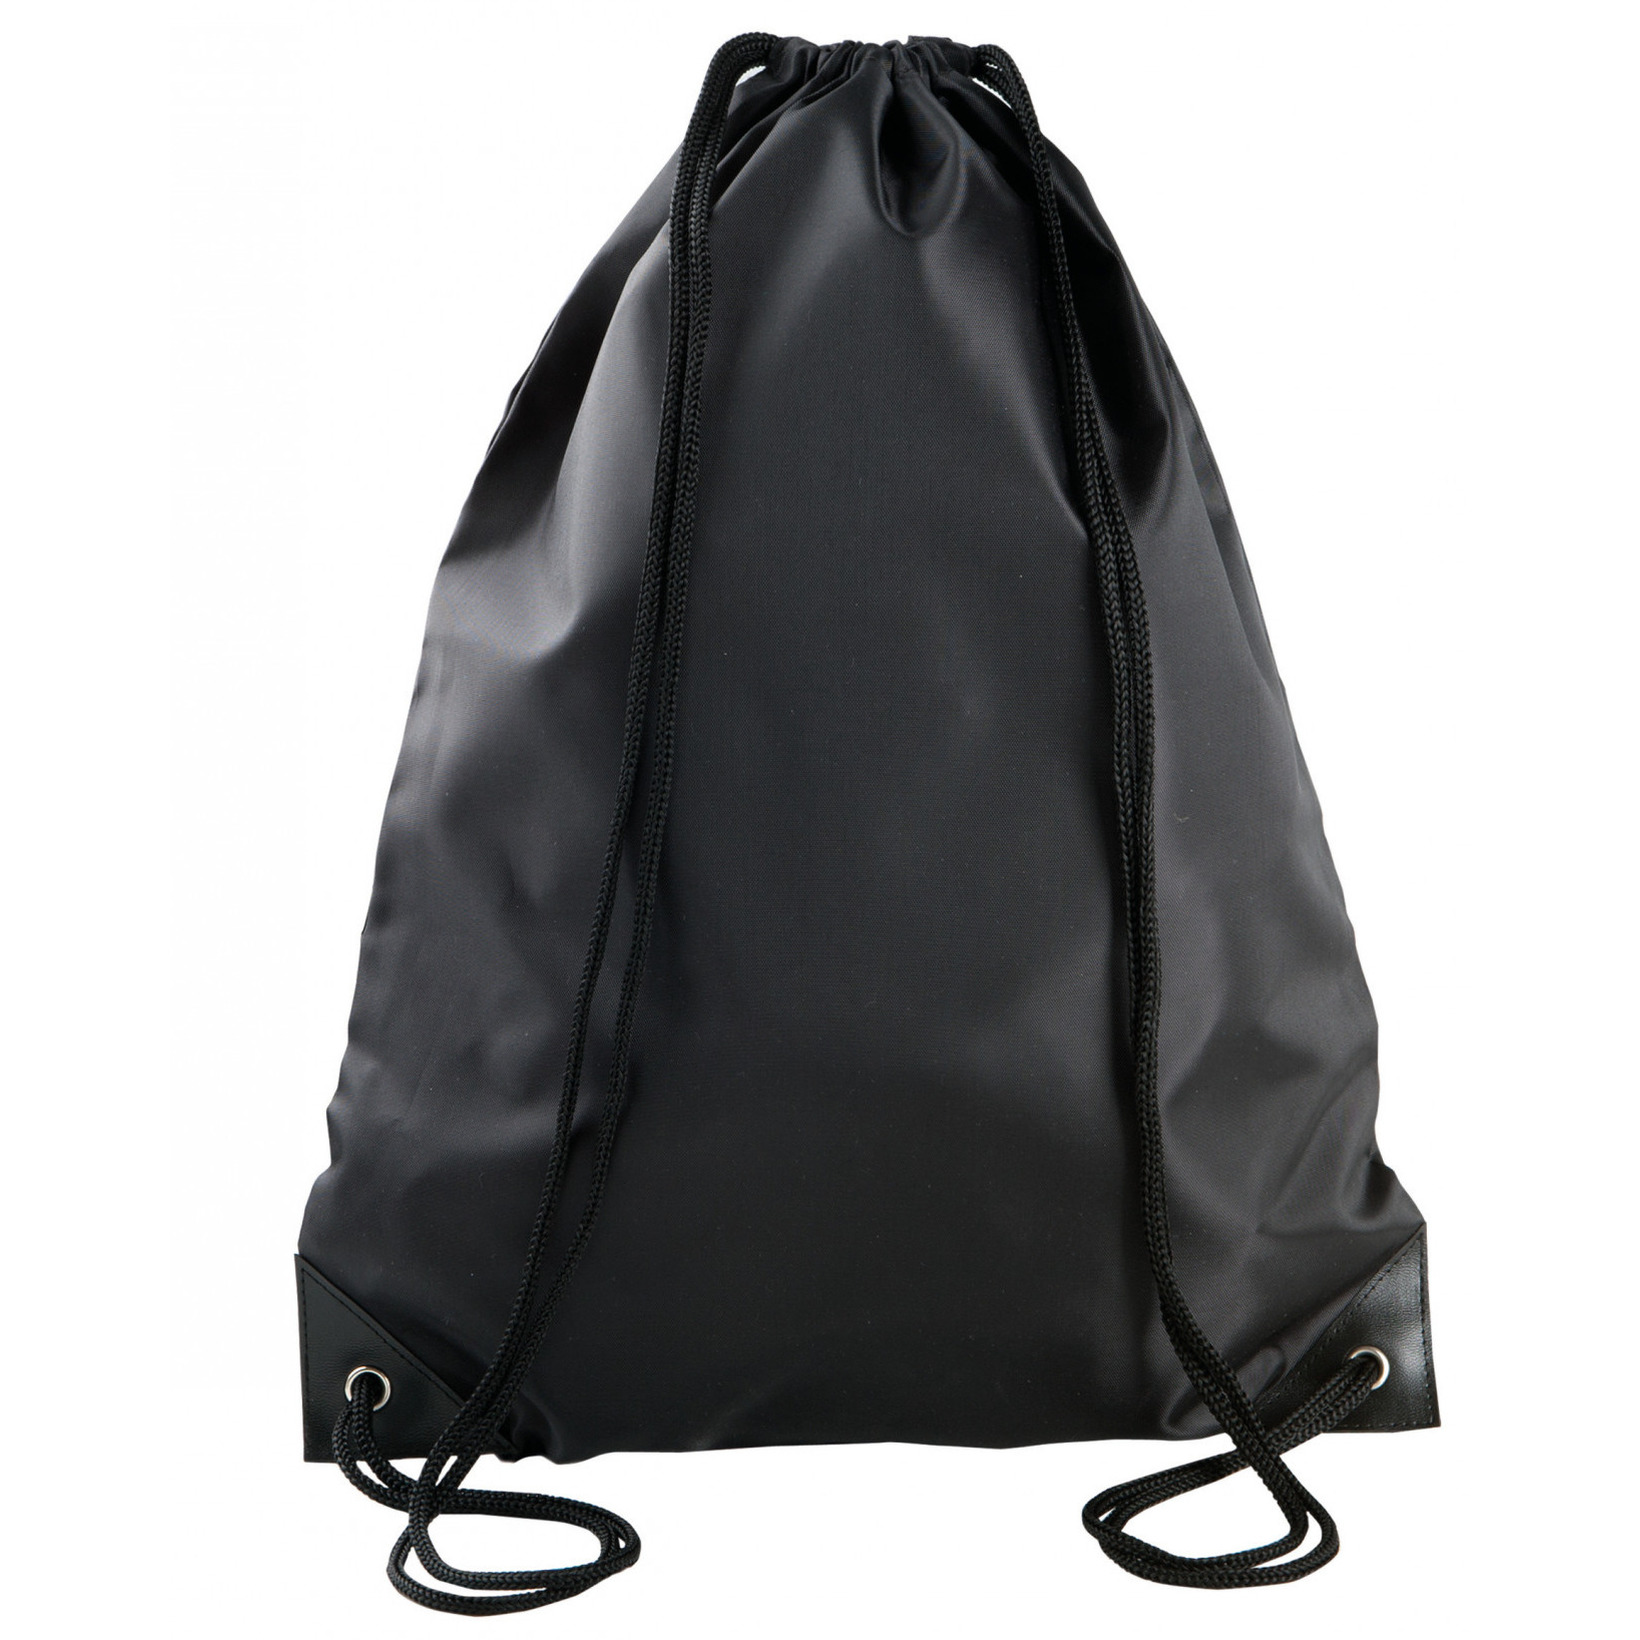 Sport gymtas-draagtas zwart met rijgkoord 34 x 44 cm van polyester